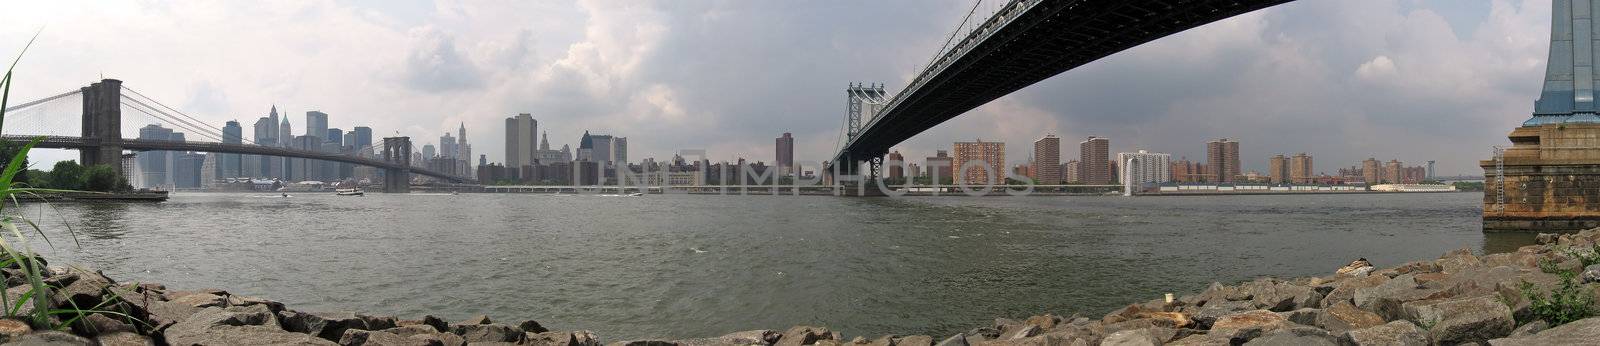 new york panorama by rorem